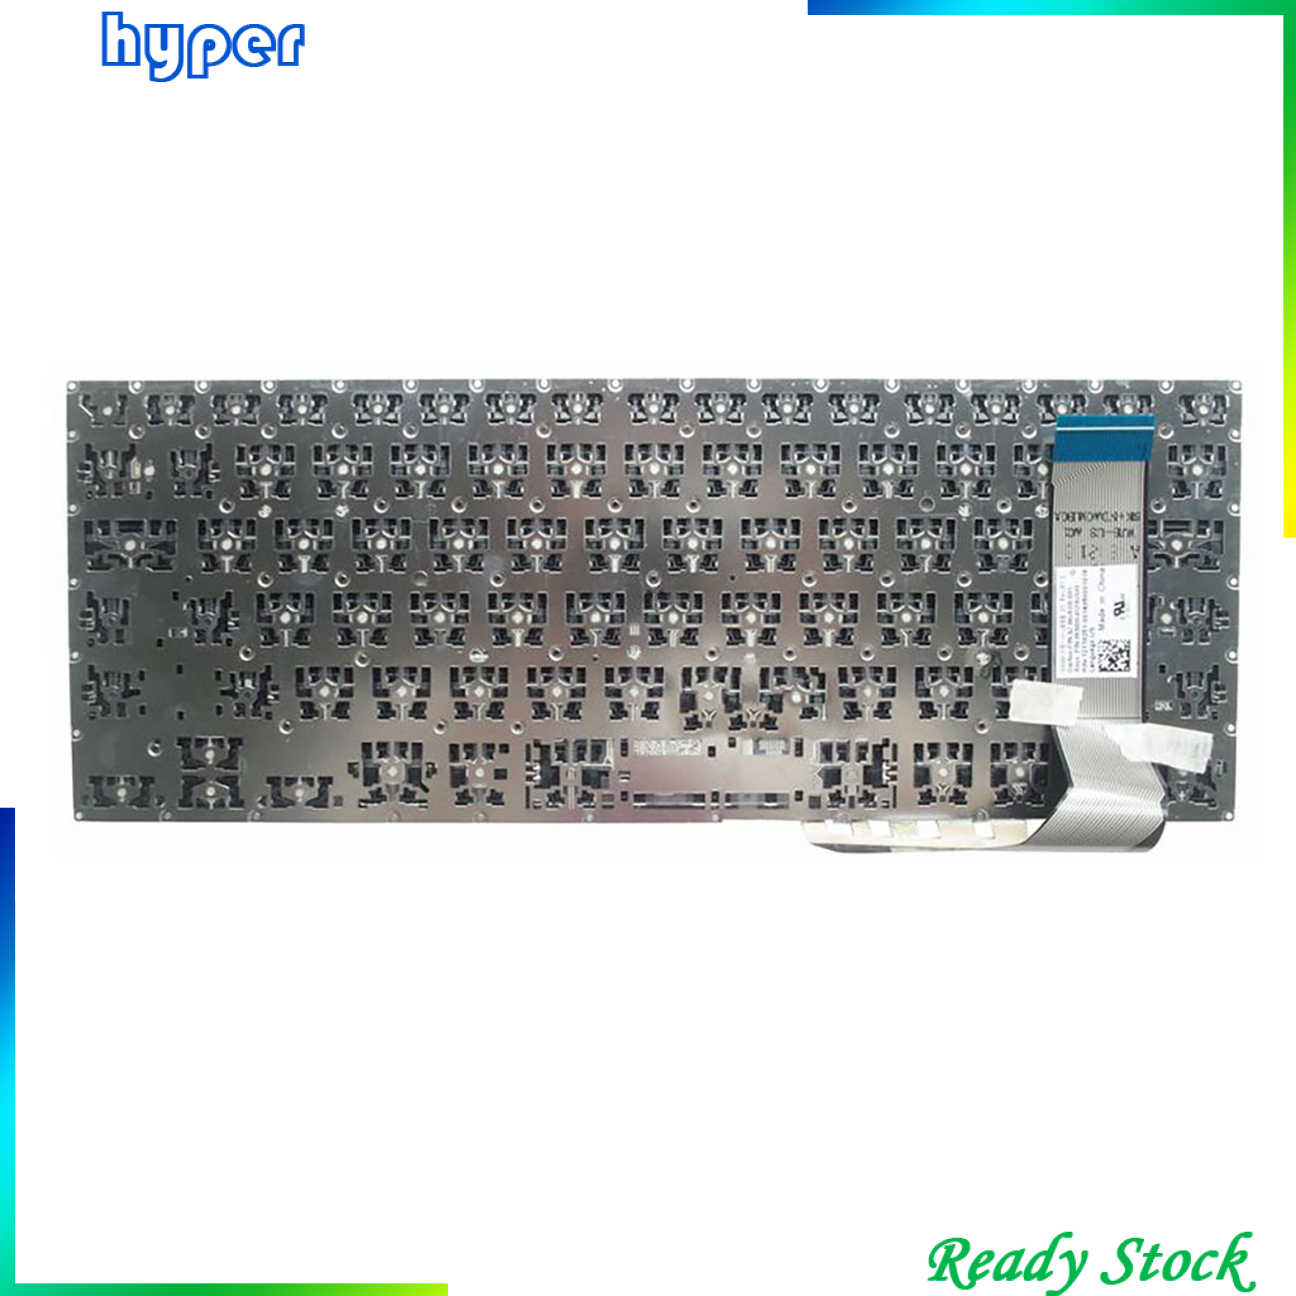 Laptop US Version English Keyboard for ASUS X407 X407MA X407UBR X407UA A407